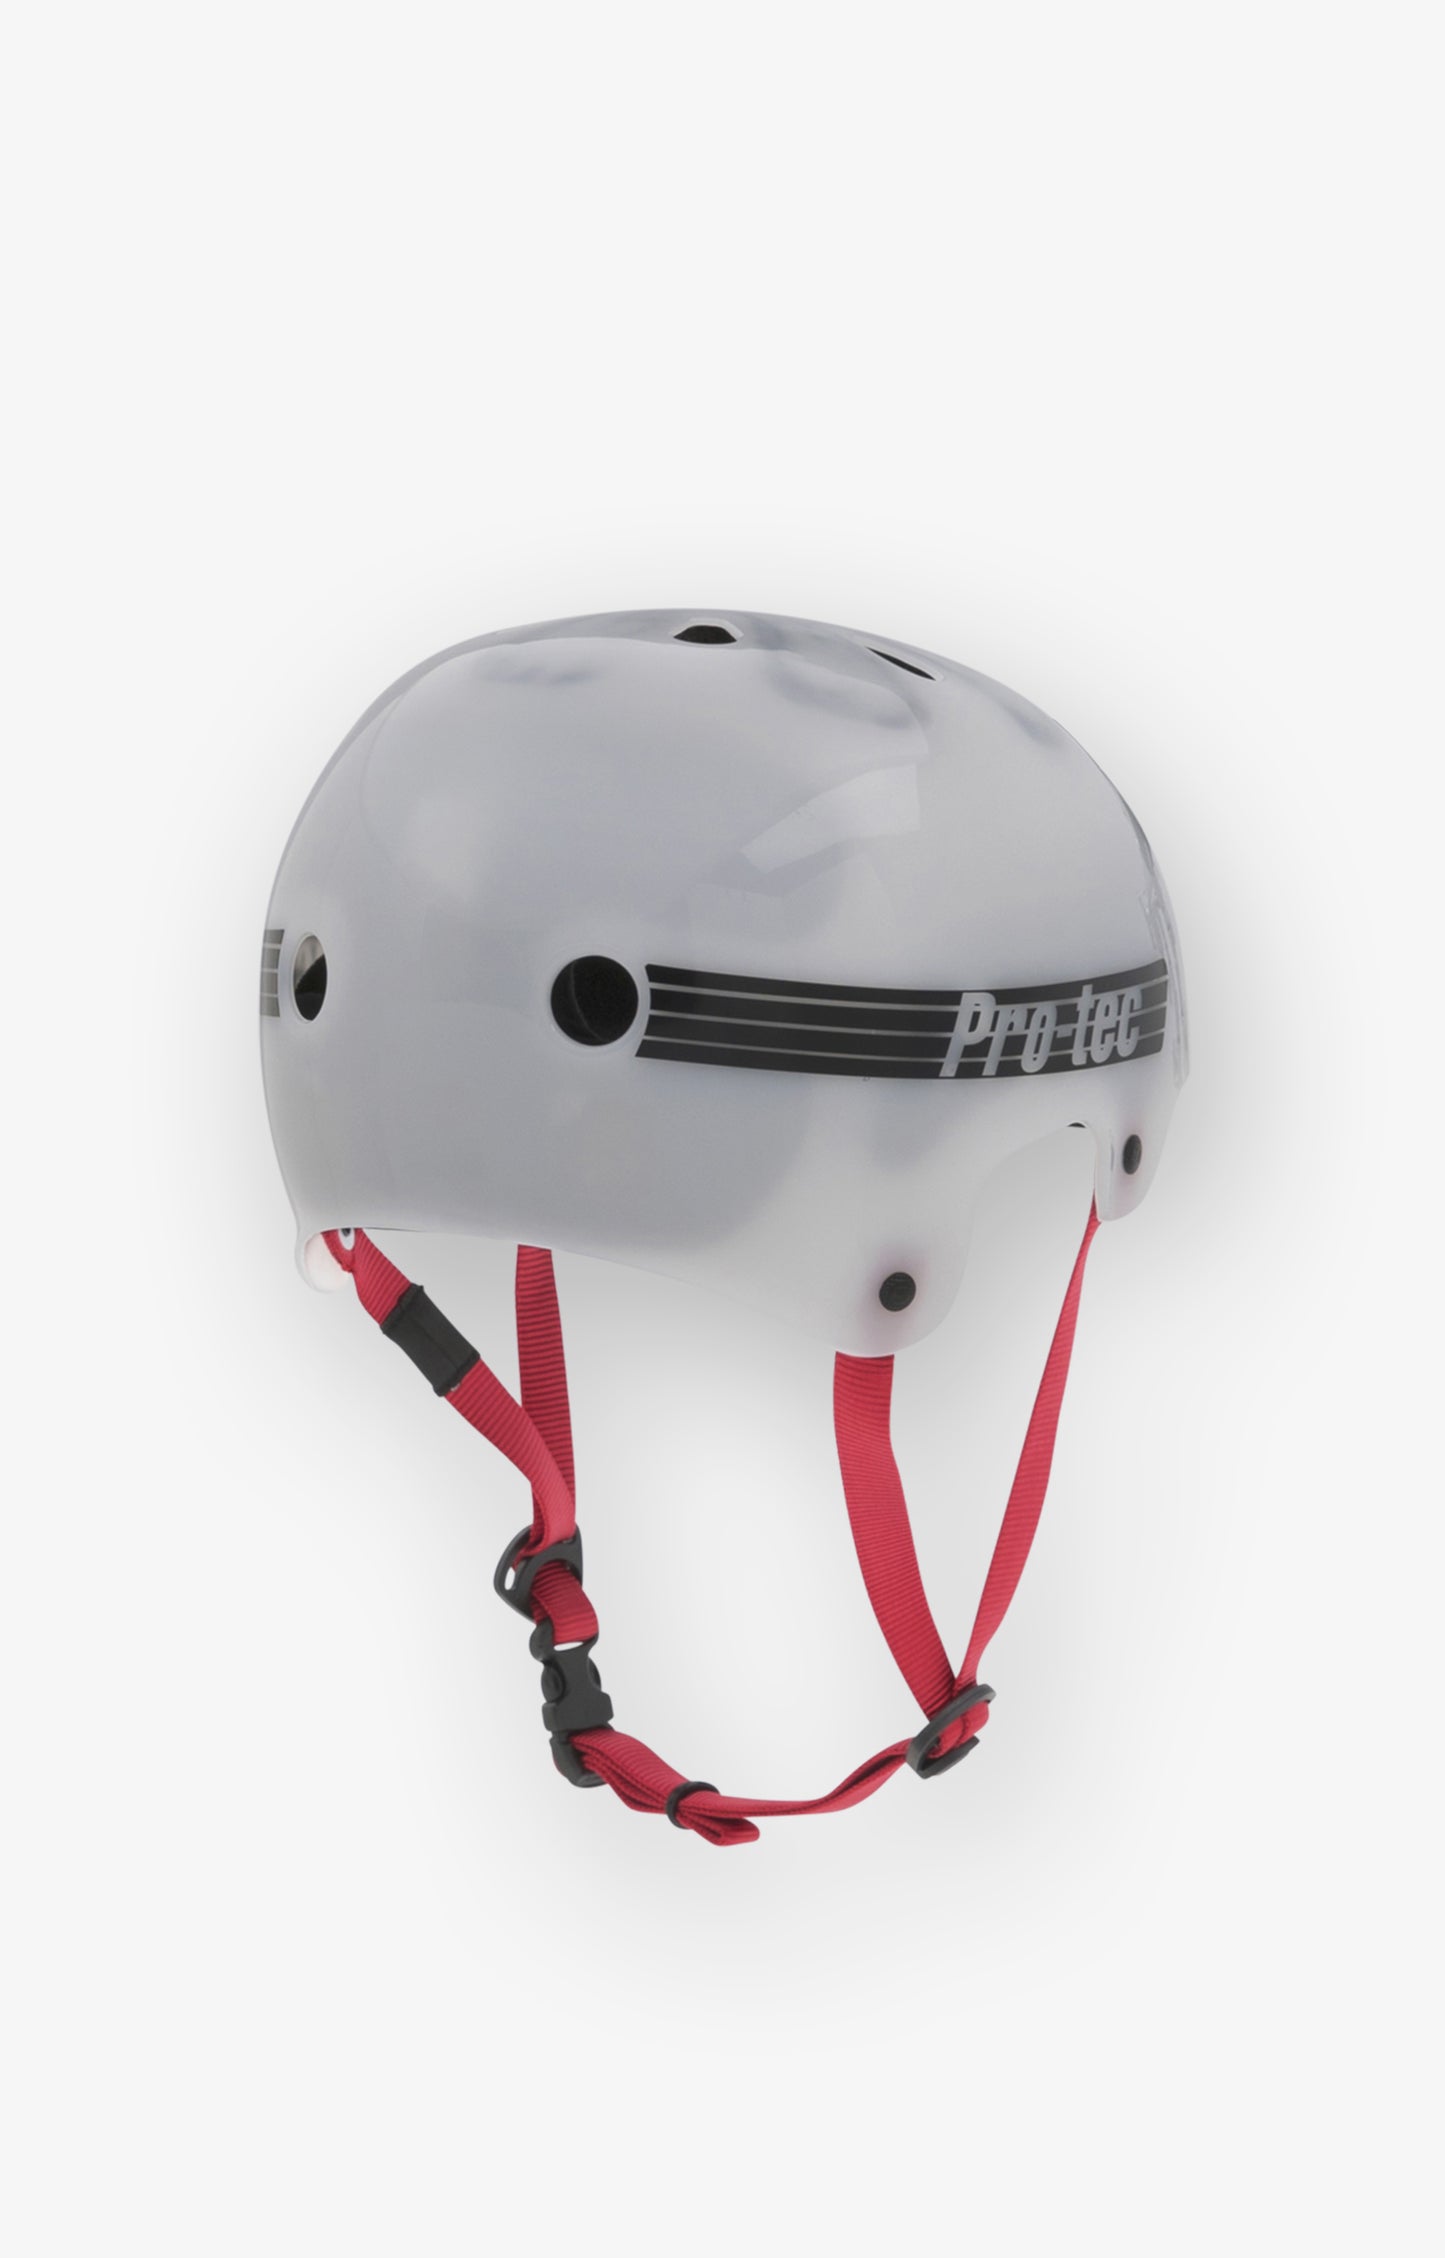 Pro-Tec Bucky Lasek Helmet, Translucent White